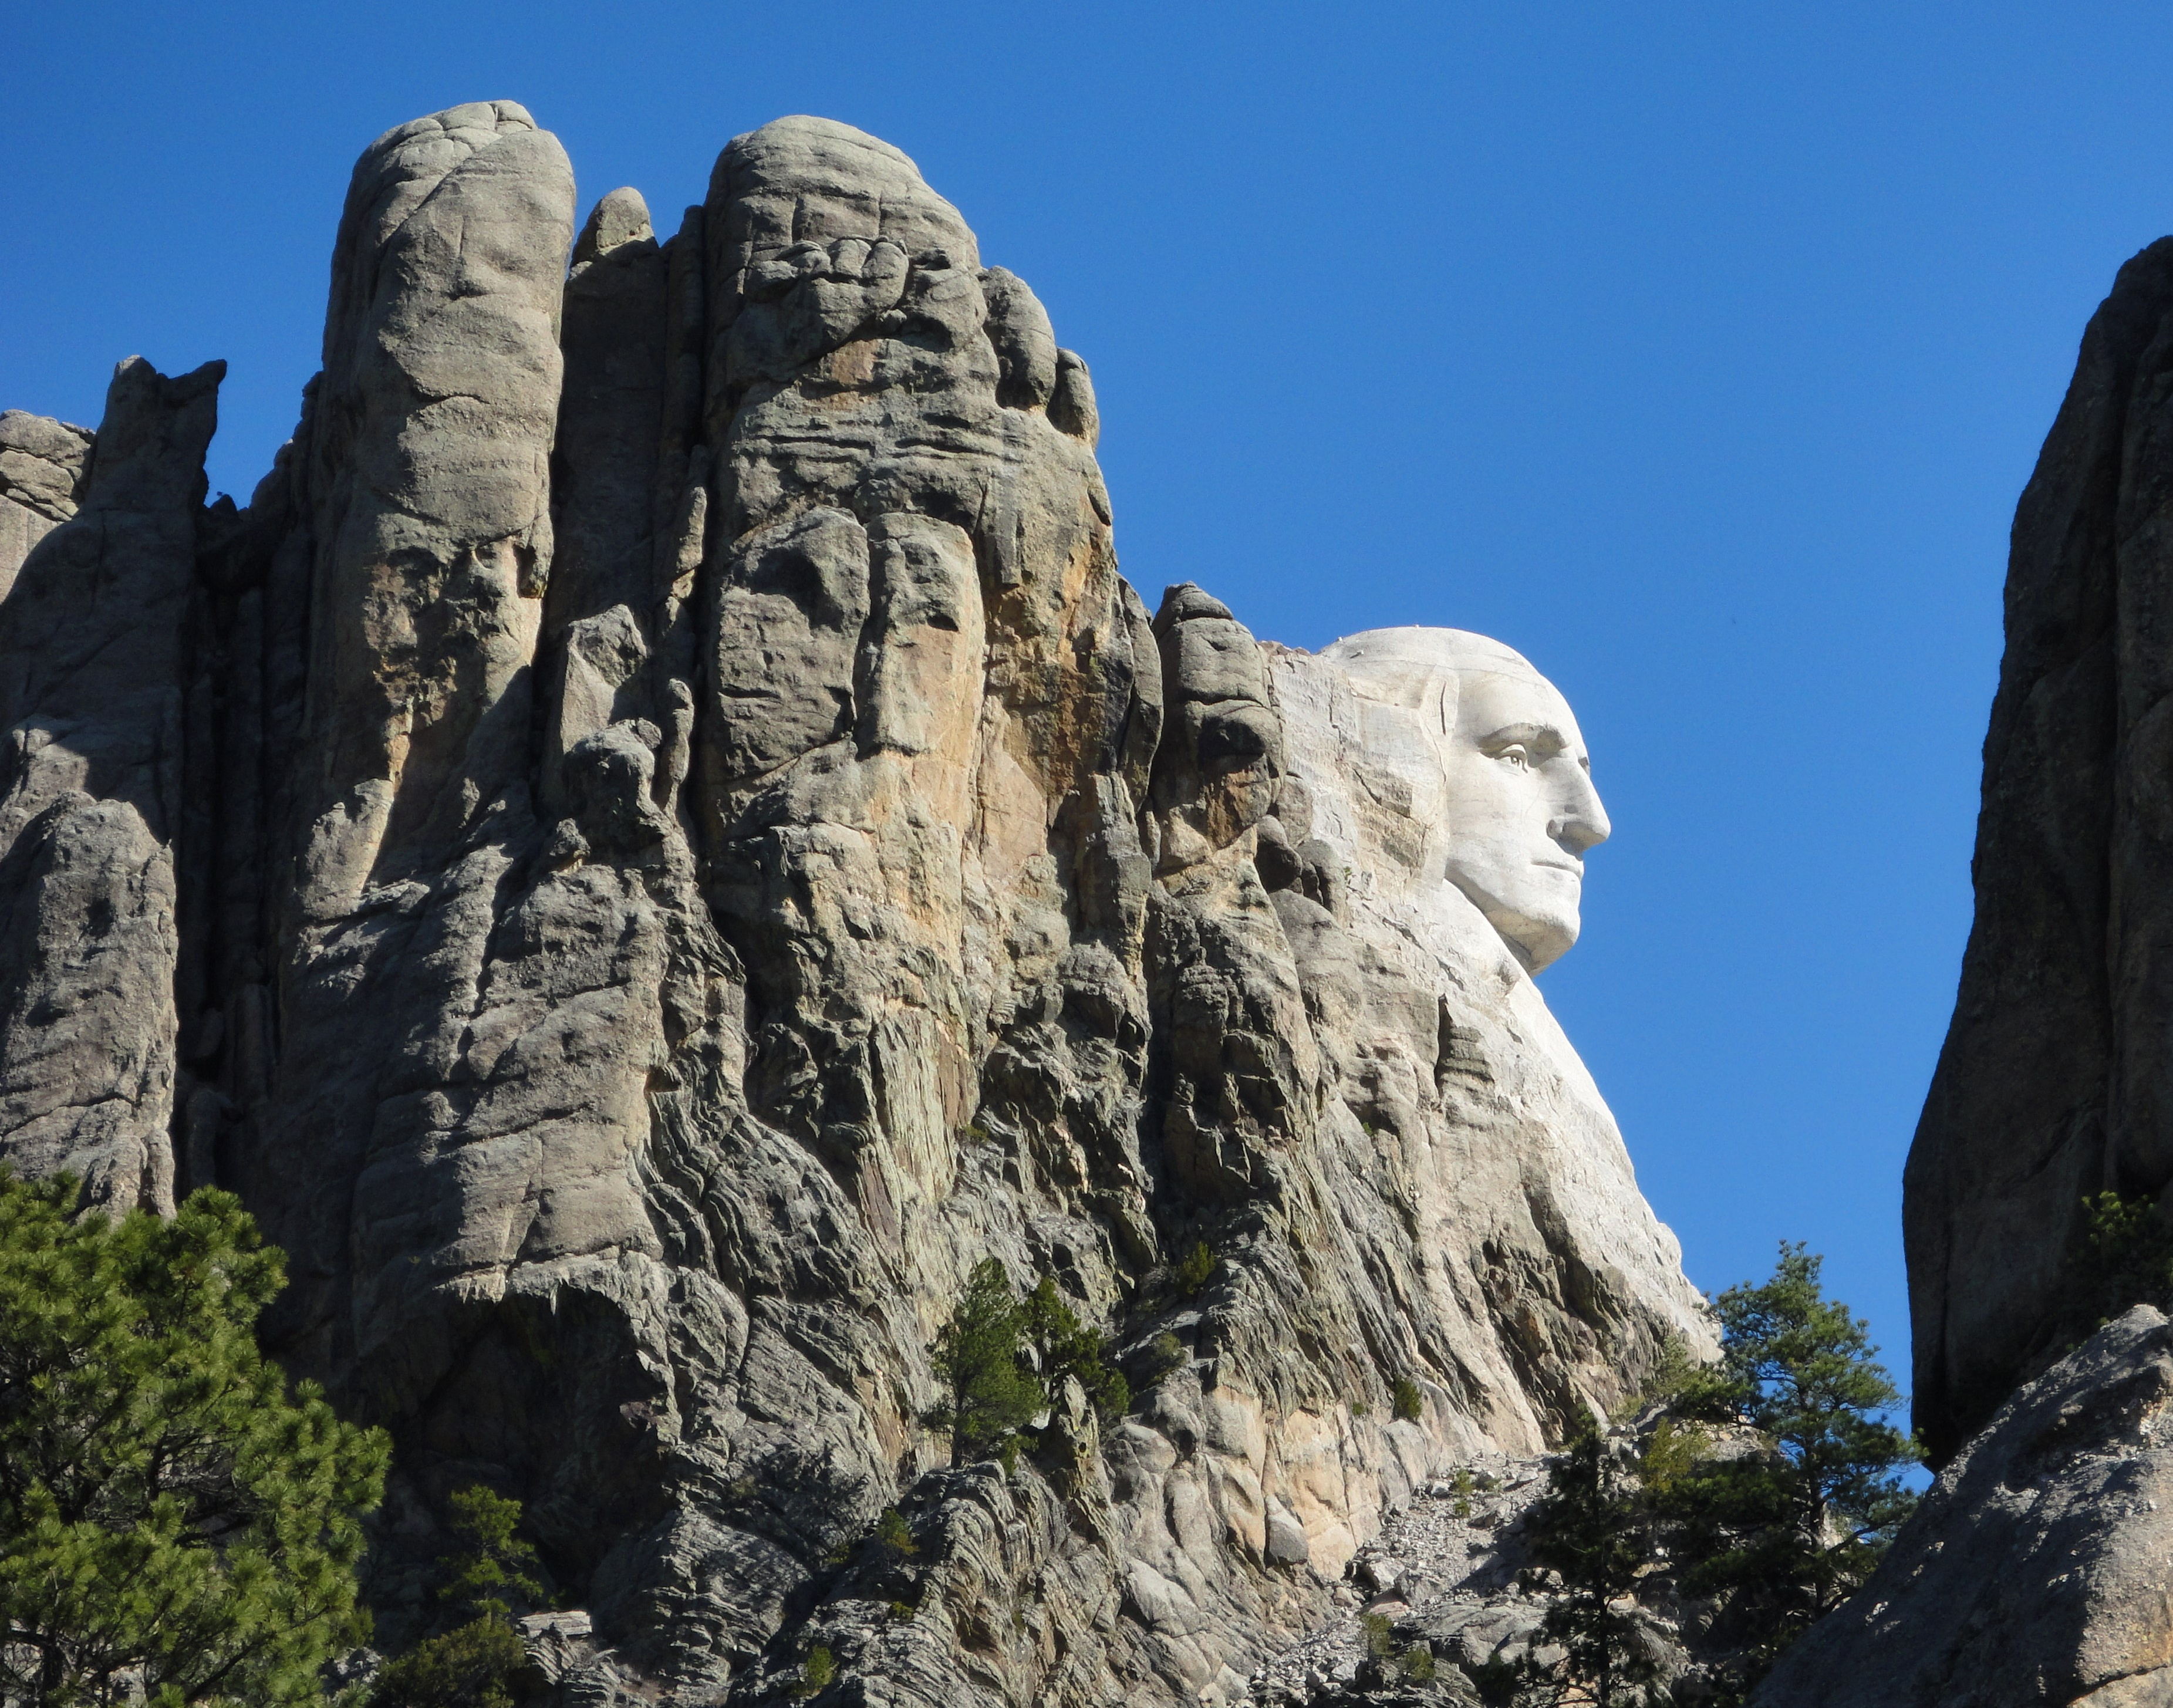 George Washington profile on Mt Rushmore